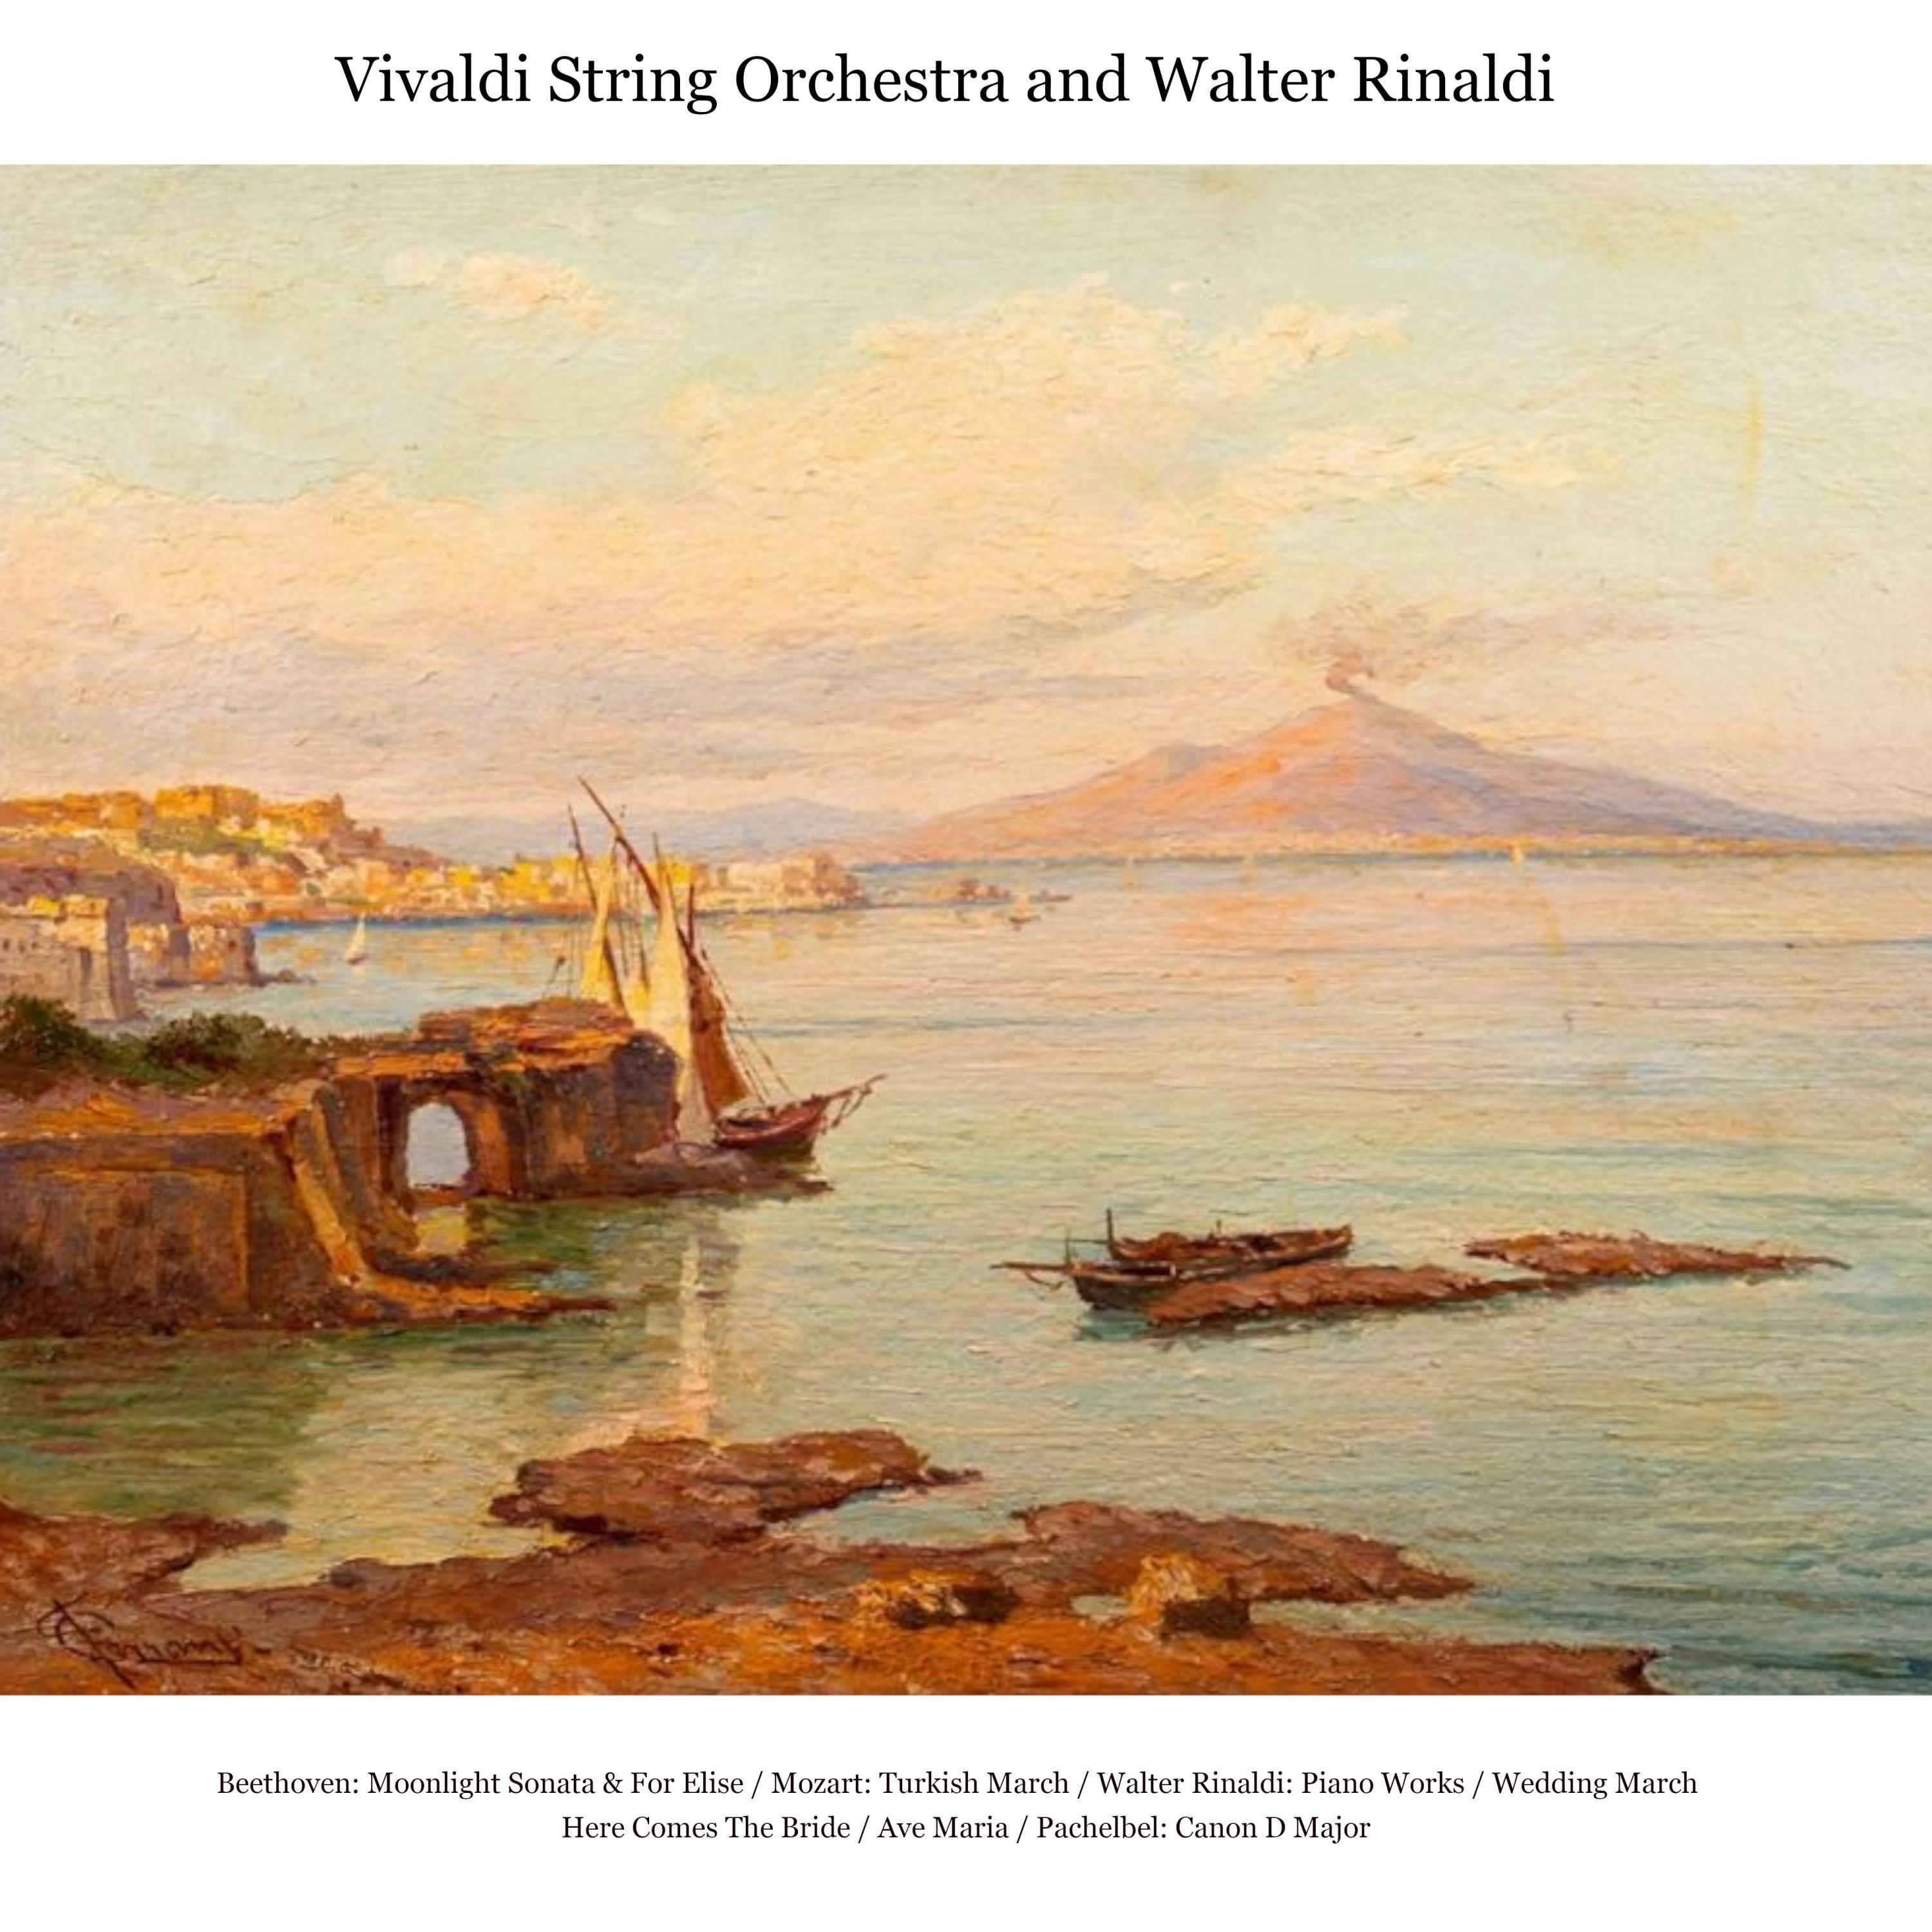 Walter Rinaldi - Wedding March for Solo Piano, from A Midsummer Night's Dream: Allegro Vivace